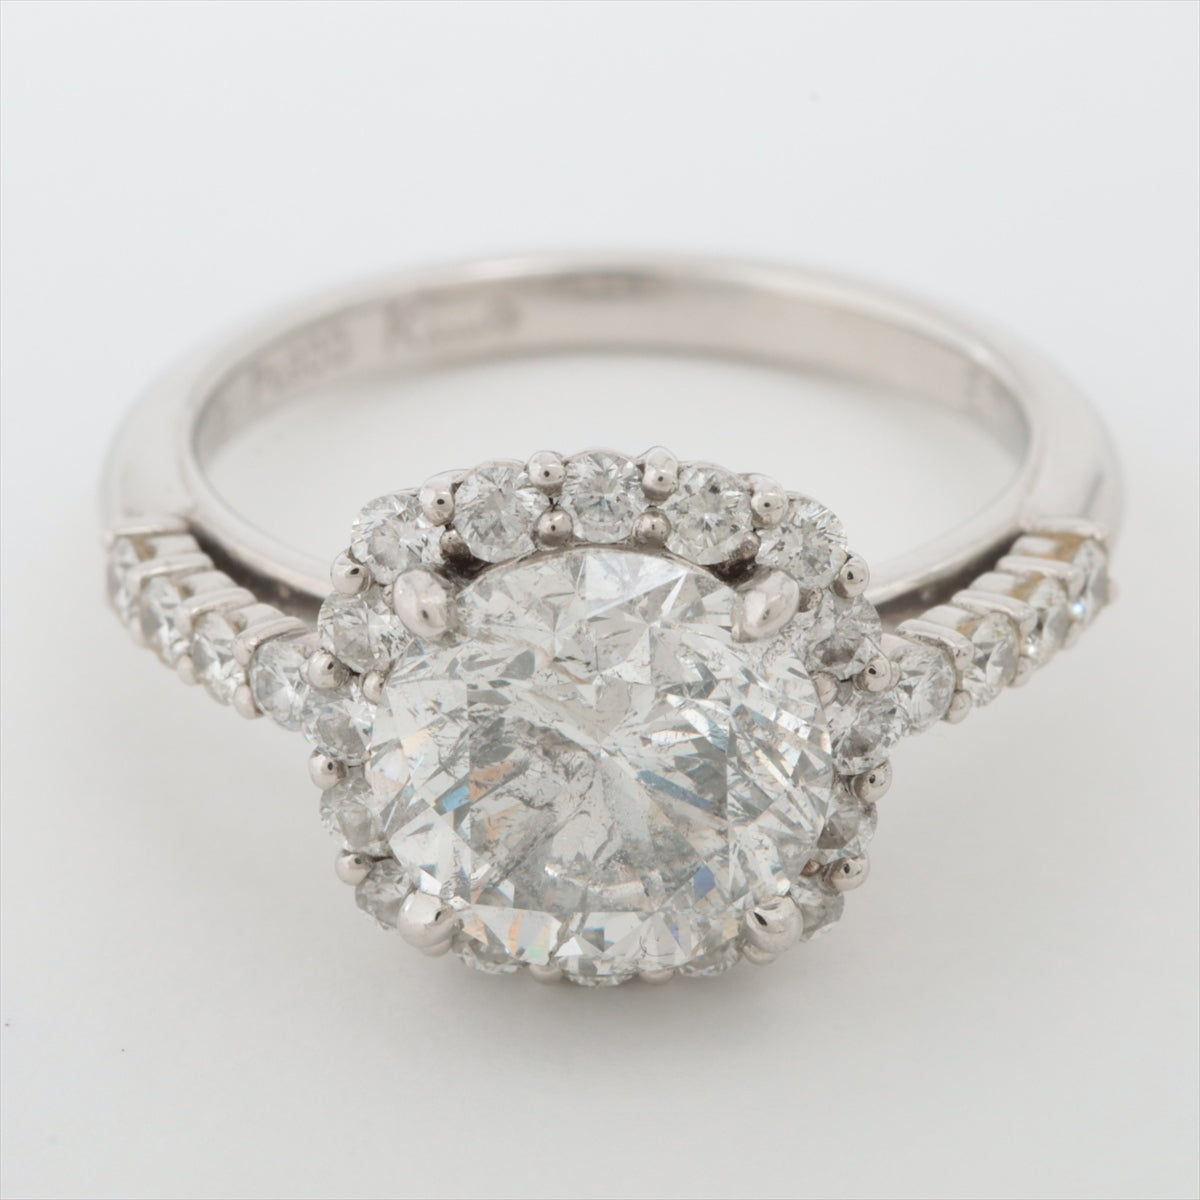 K.UNO Diamond Ring Pt900 5.7g 2.23 0.48 Initial Main stone cracked